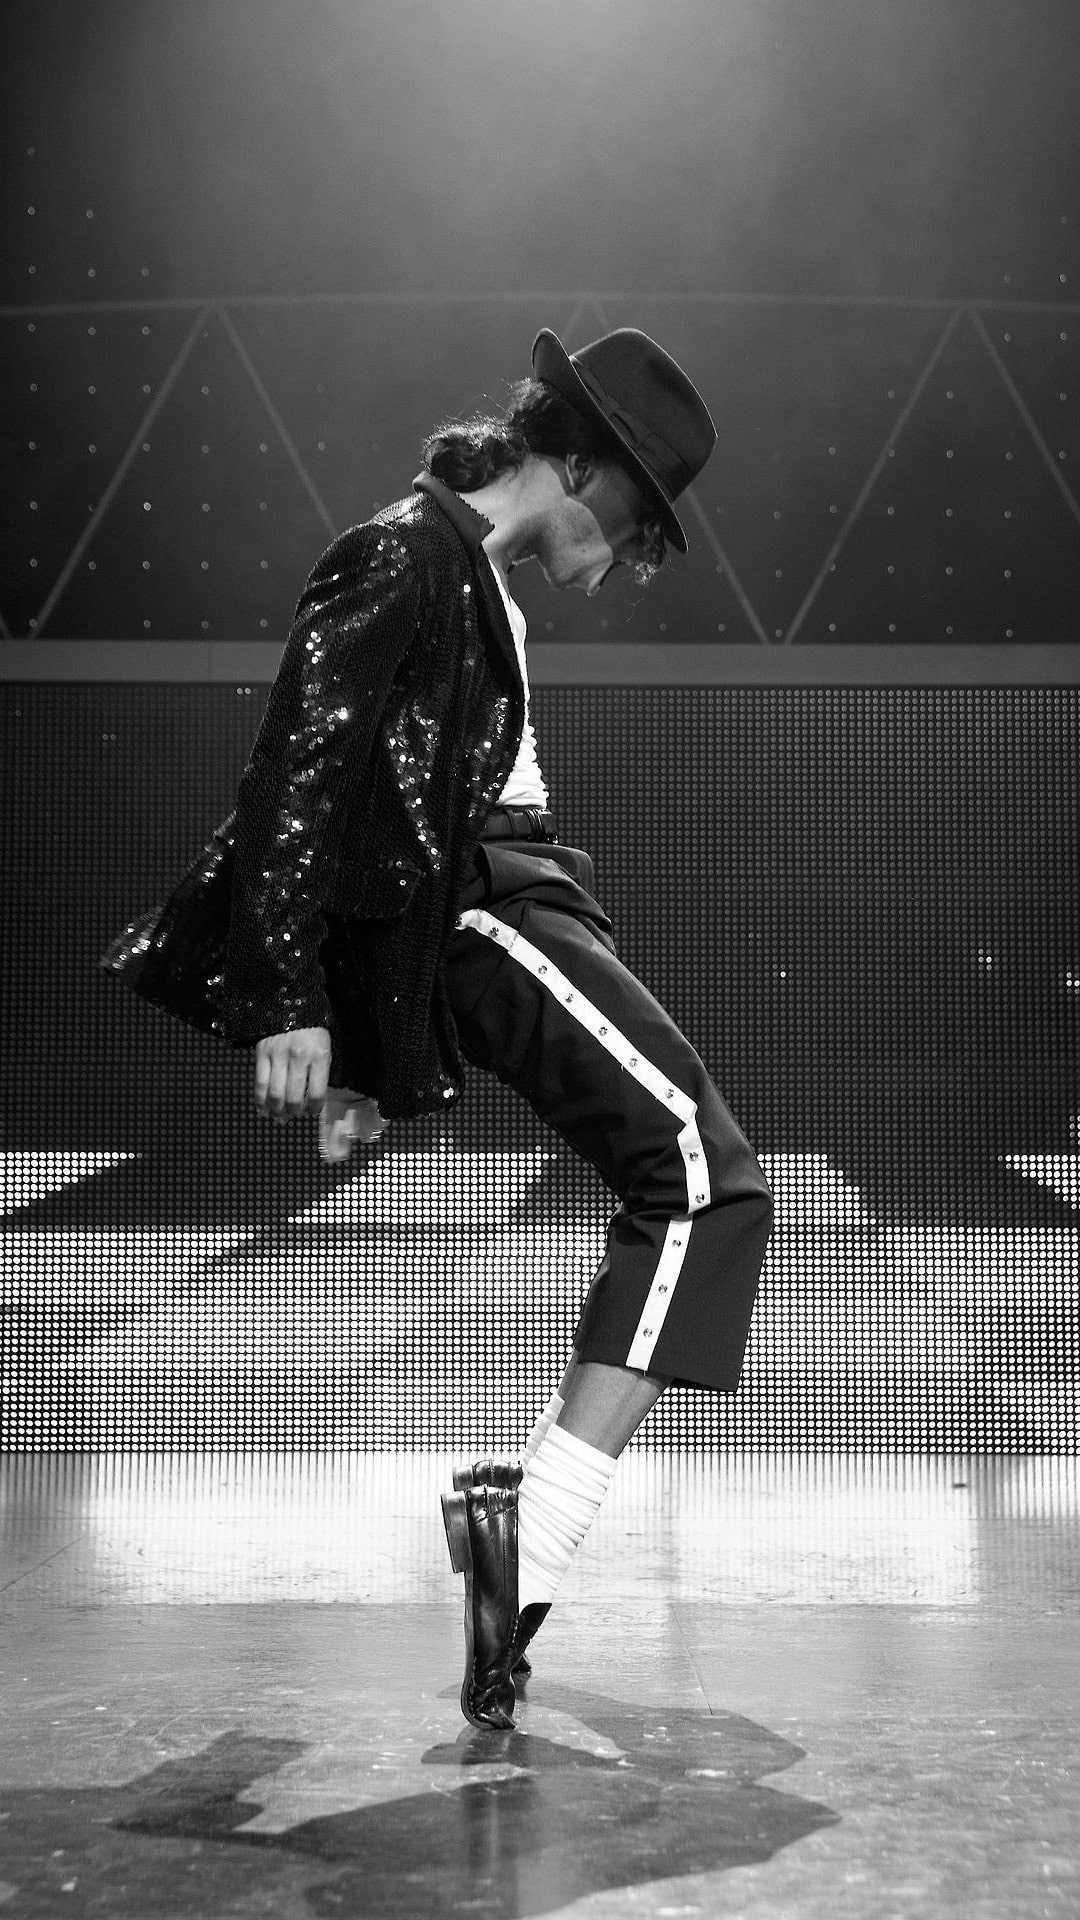 Moonwalk Dance: MJ dance, Pop sensation, The era of pop, The 80ths, A global icon. 1080x1920 Full HD Wallpaper.